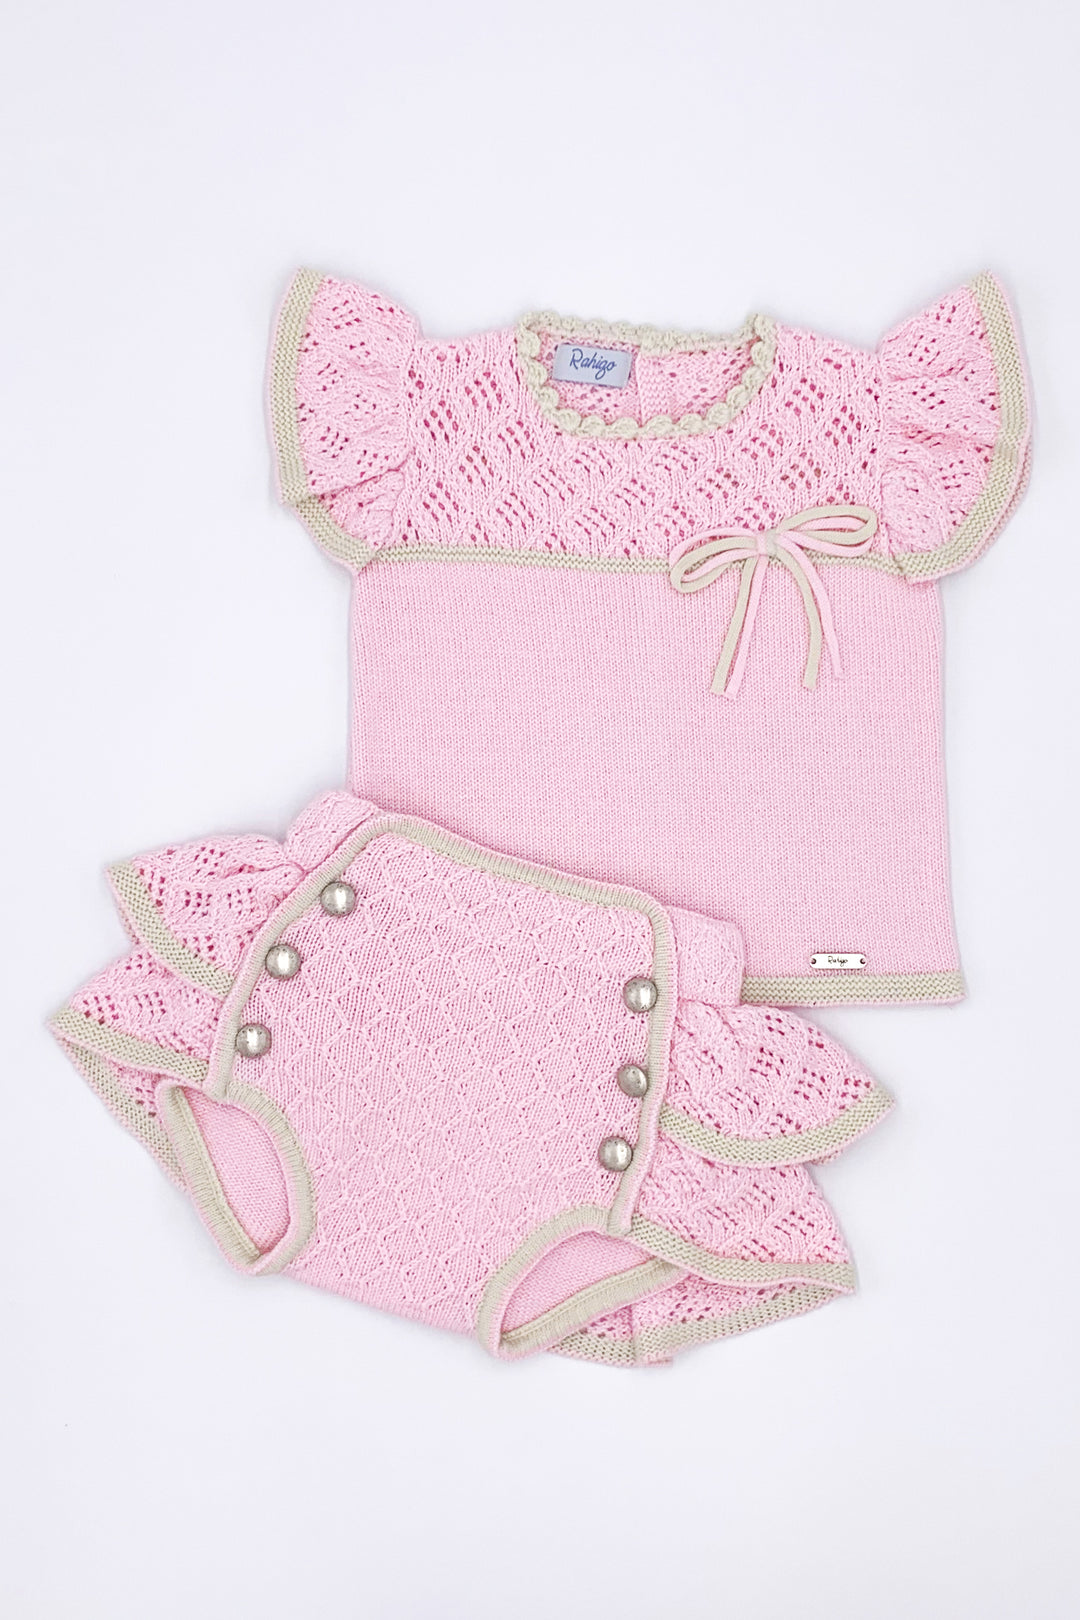 Rahigo PREORDER "Amelie" Pink & Cream Knit Top & Bloomers | Millie and John